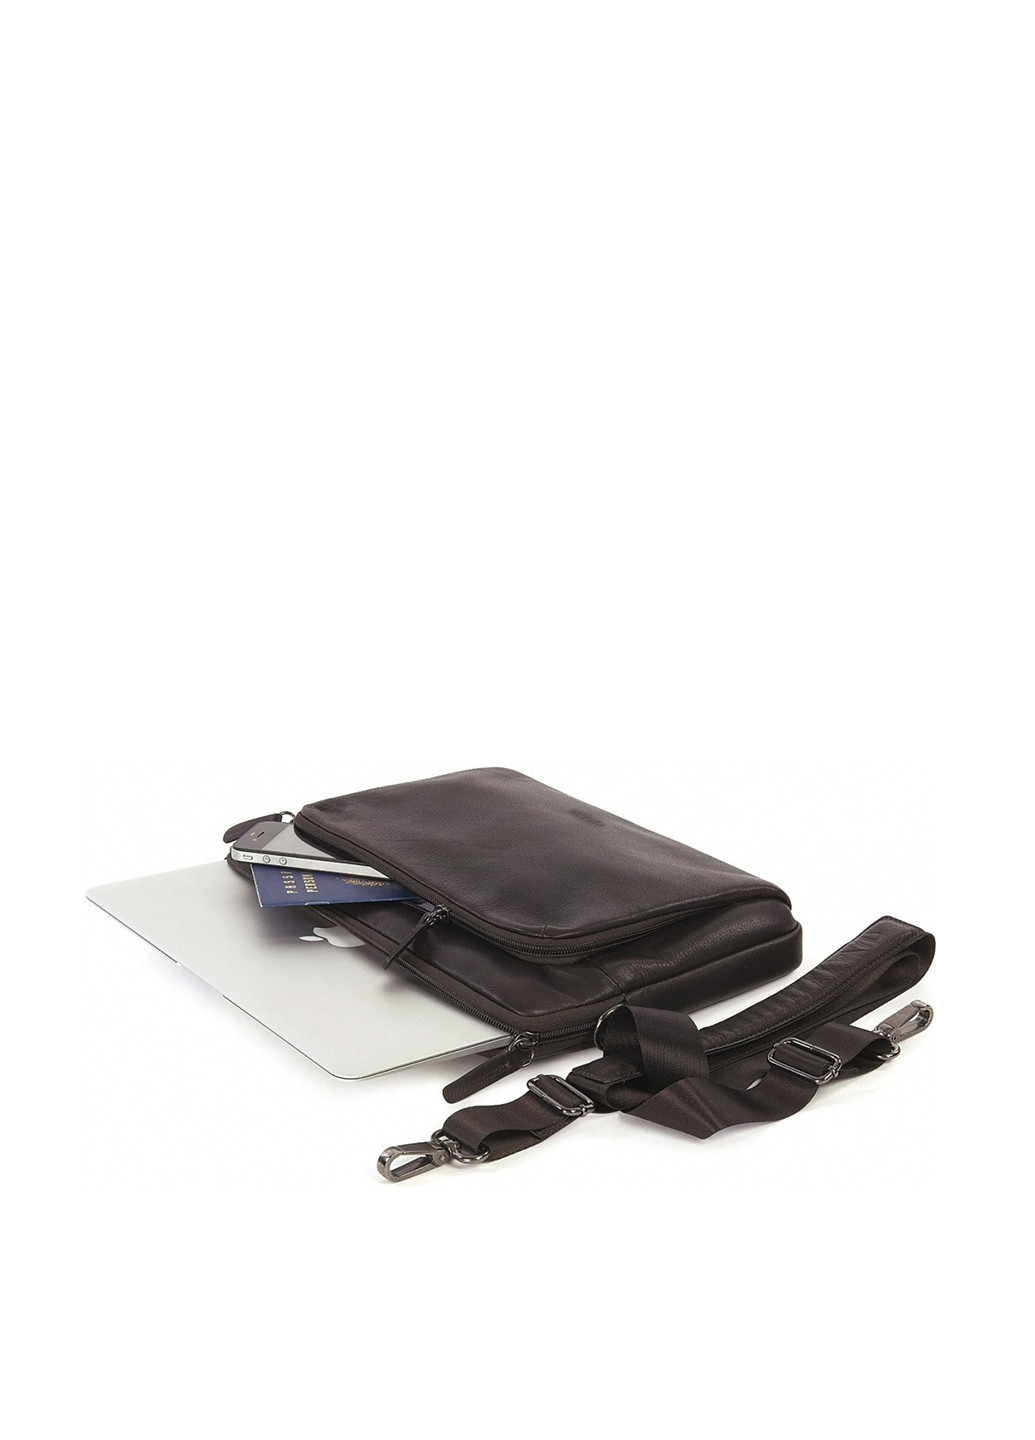 Сумка для ноутбука из кожи One Premium sleeve 11" Brown (коричневая) Tucano bfop11-m (133590936)